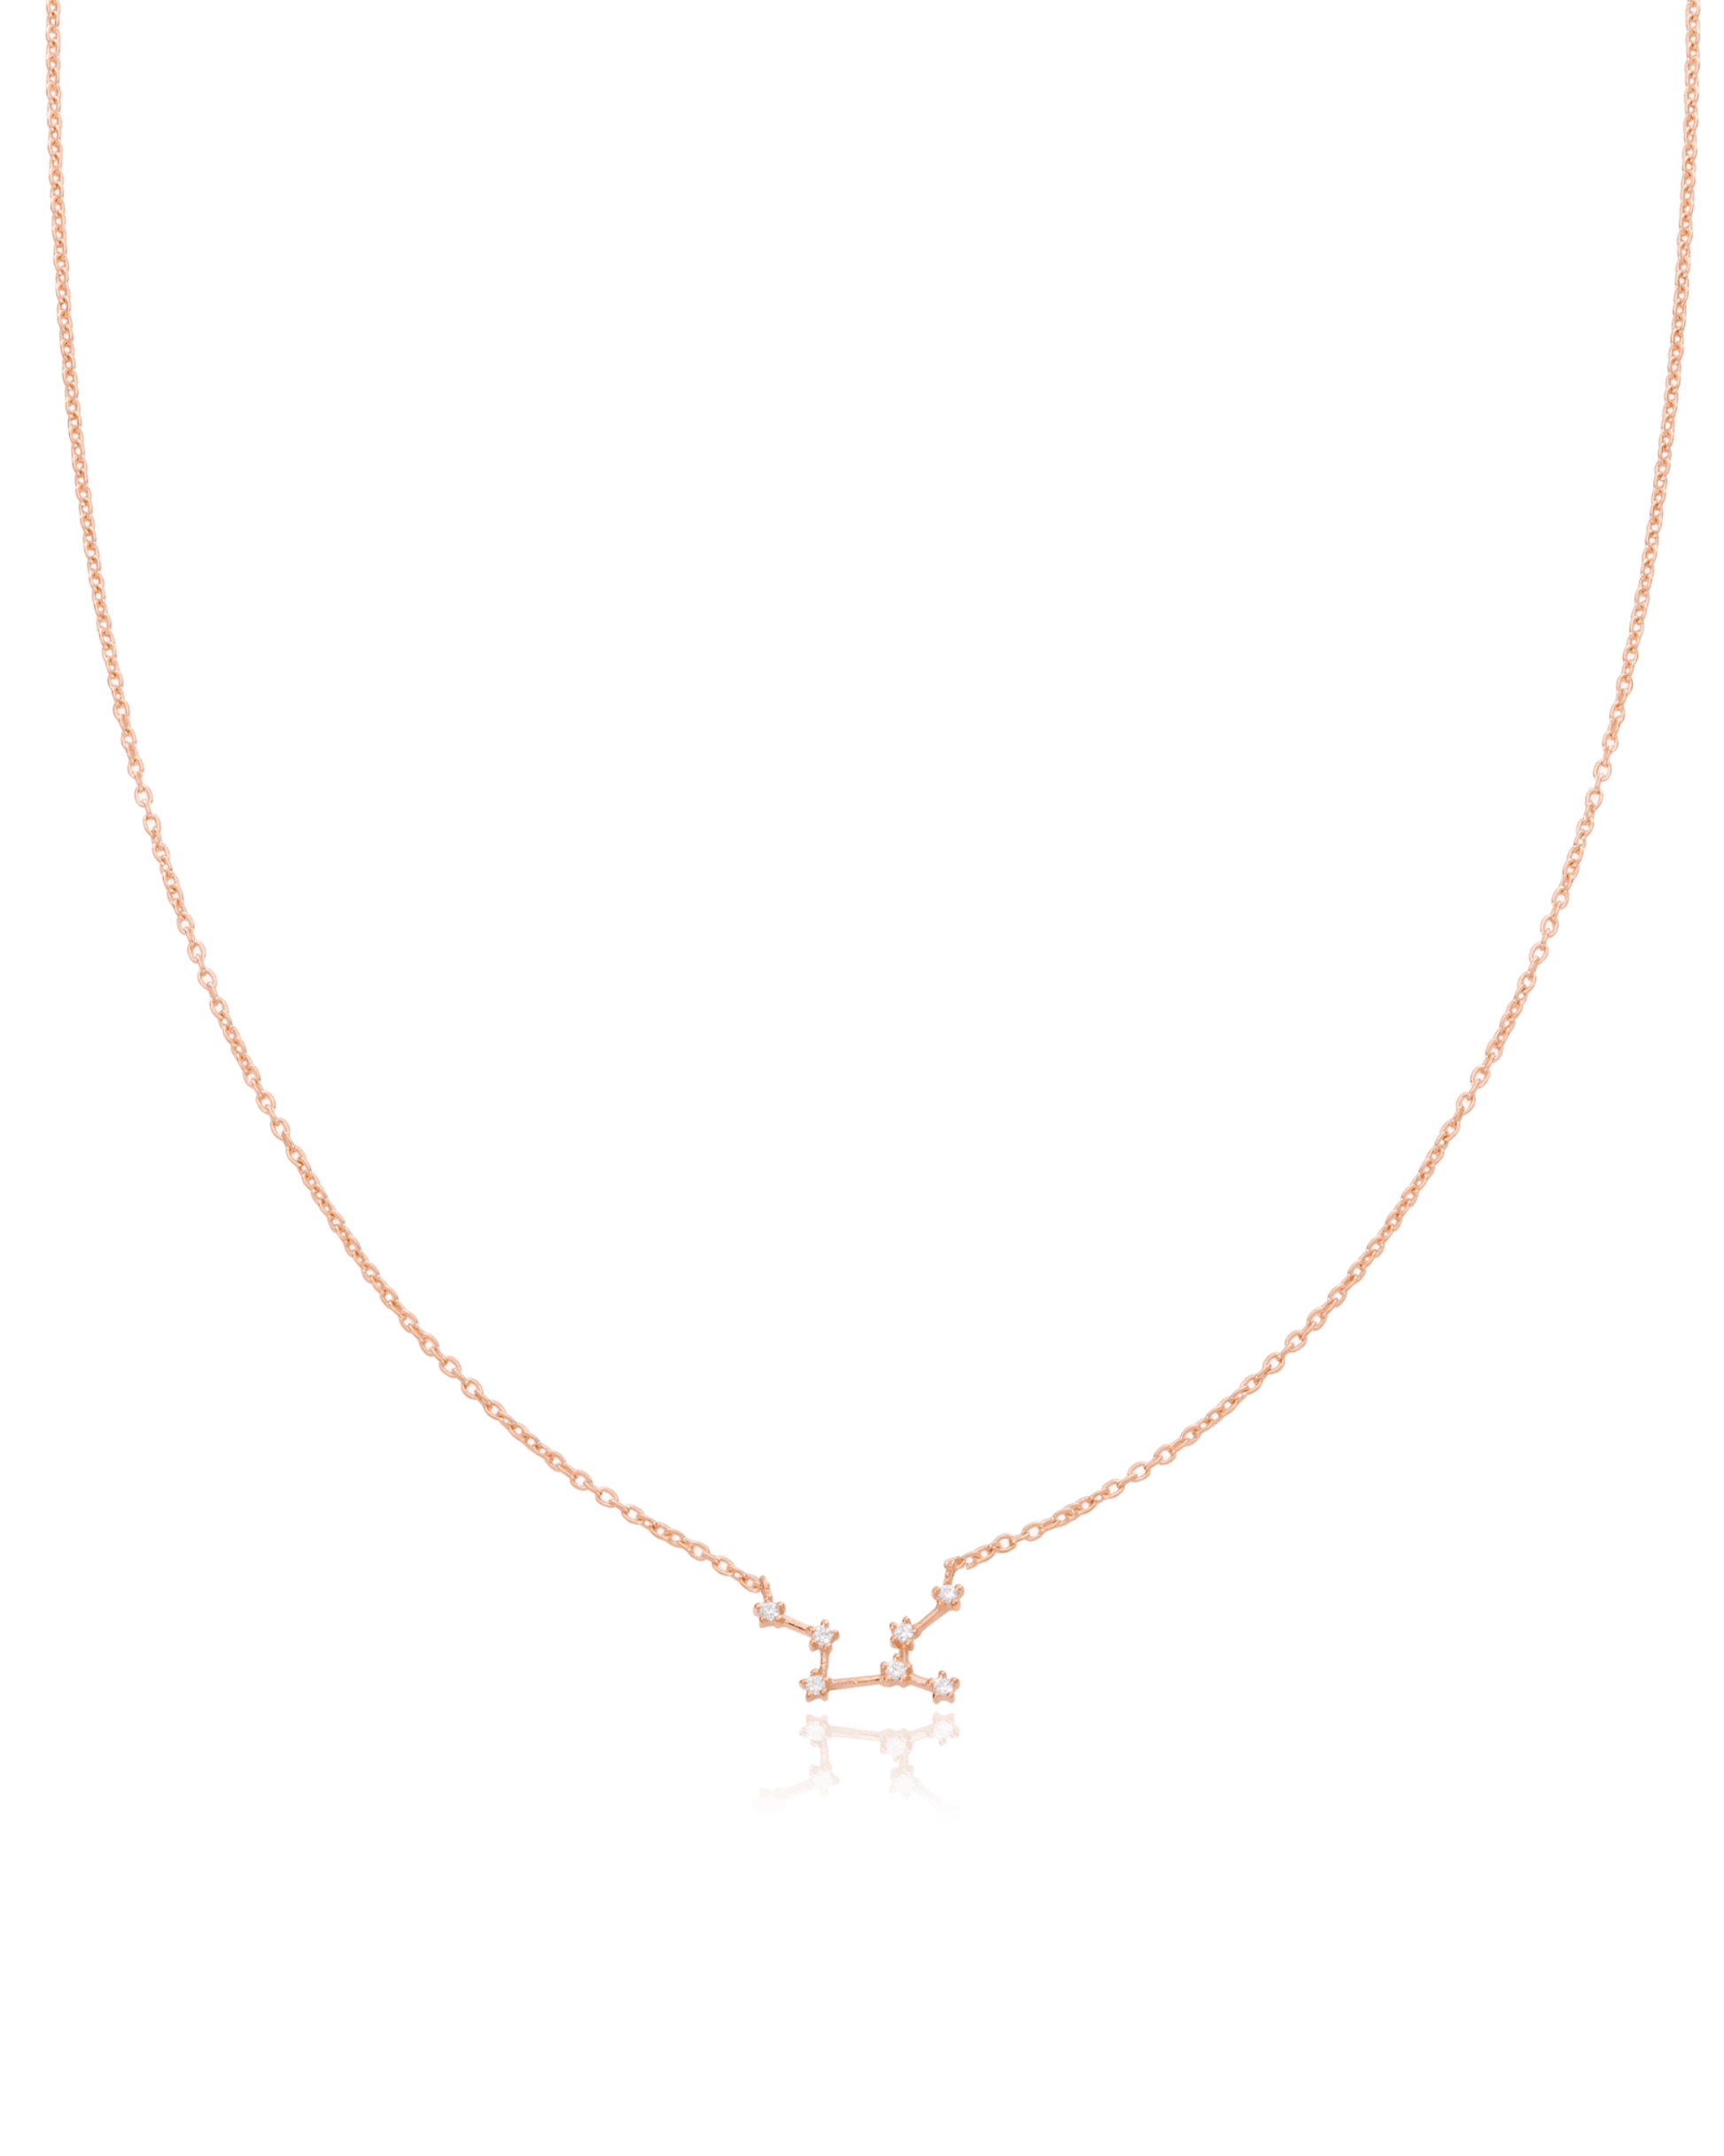 Virgo Constellation Necklace - 925 Sterling Silver Necklaces magal-dev 